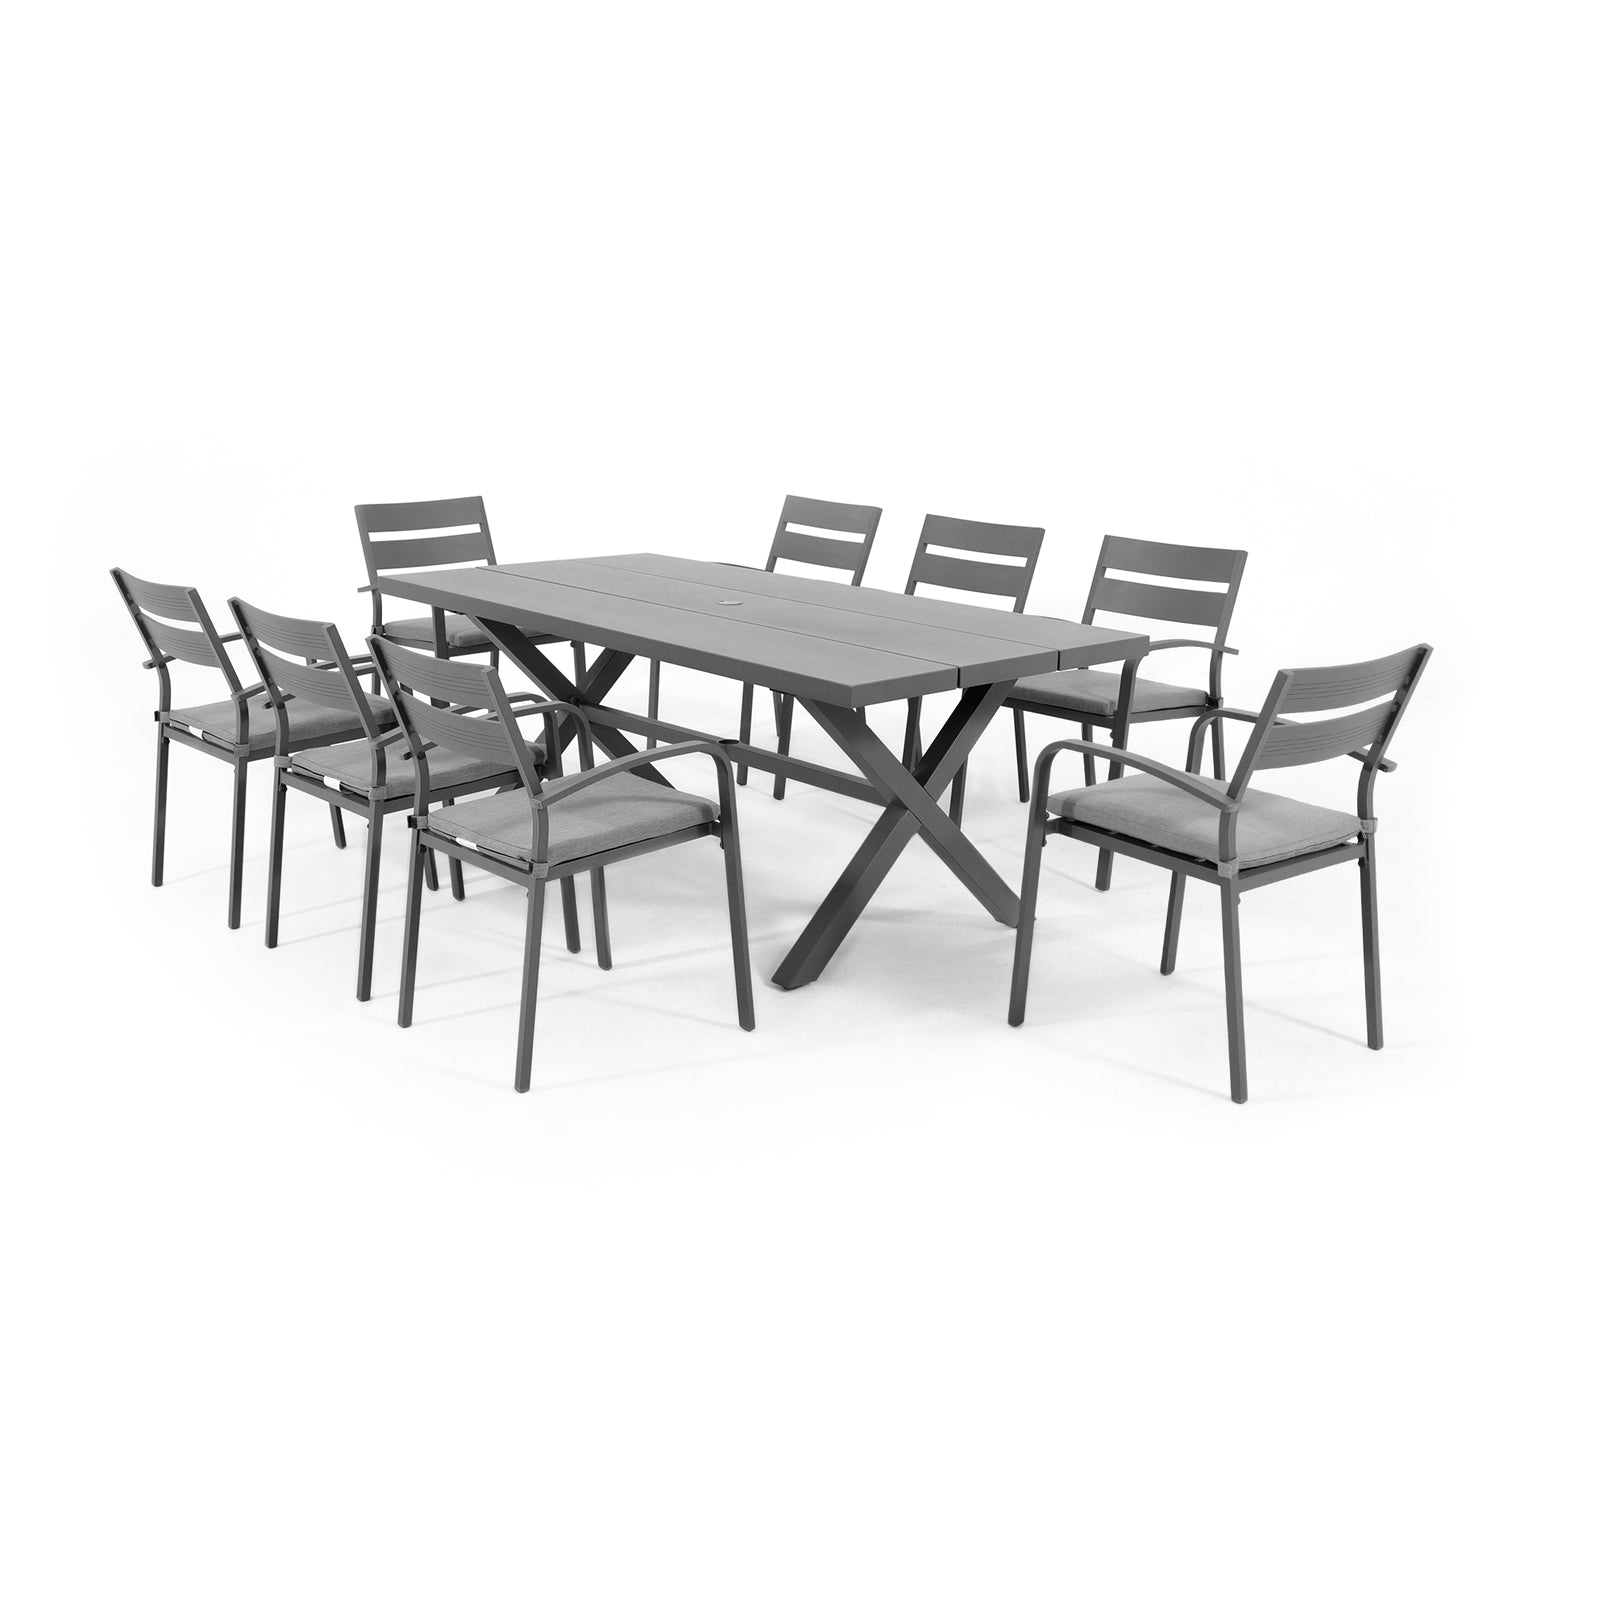 Salina Modern Aluminum Outdoor Furniture, Grey Aluminum Frame Outdoor Dining Set for 8, 8 dining chairs with cushions and X-Shaped Legs Design Dining Table - Jardina Furniture#color_Dark Grey